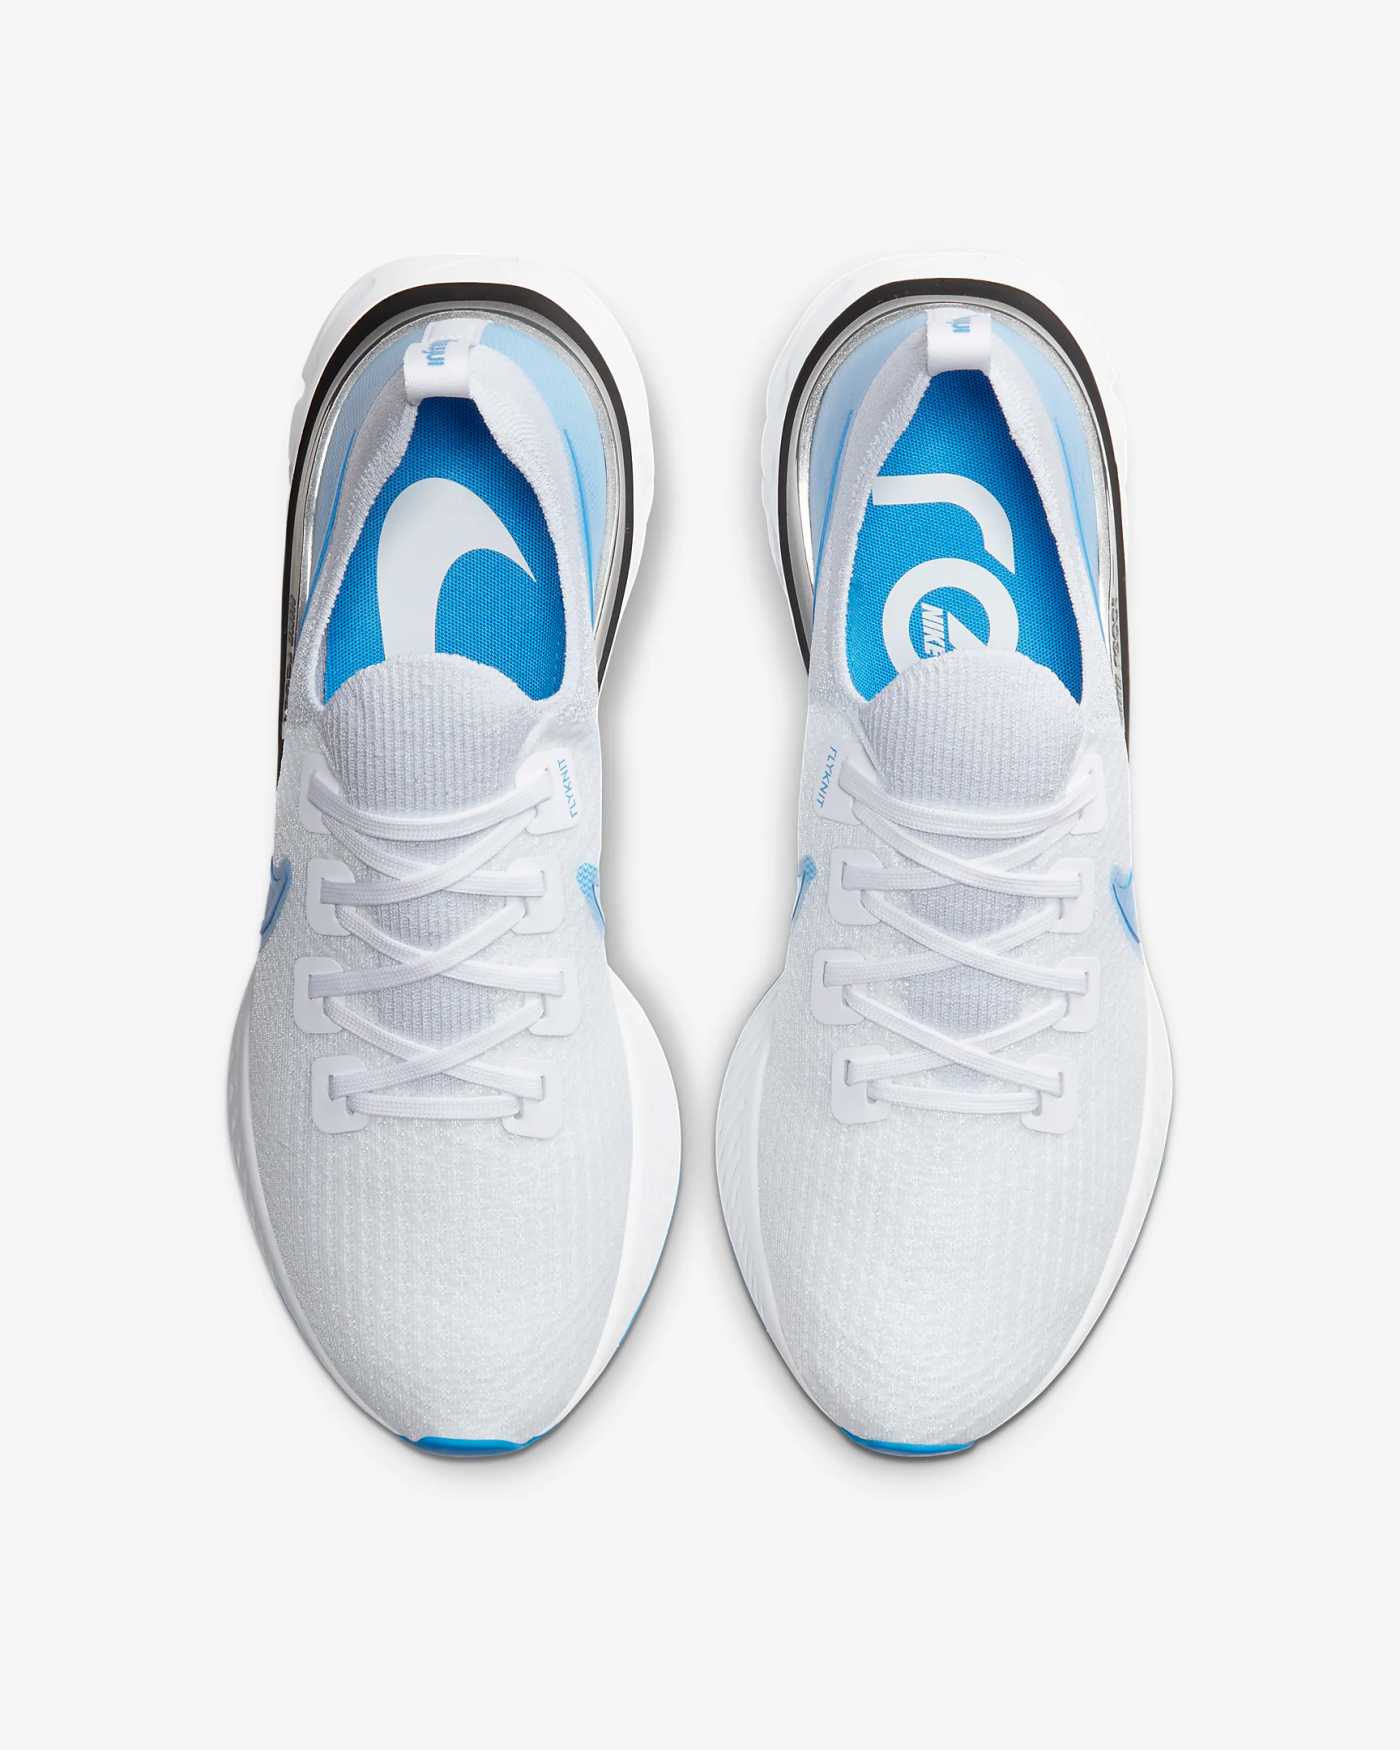 Nike-react-infinity-flyknit-blanc-bleu-4